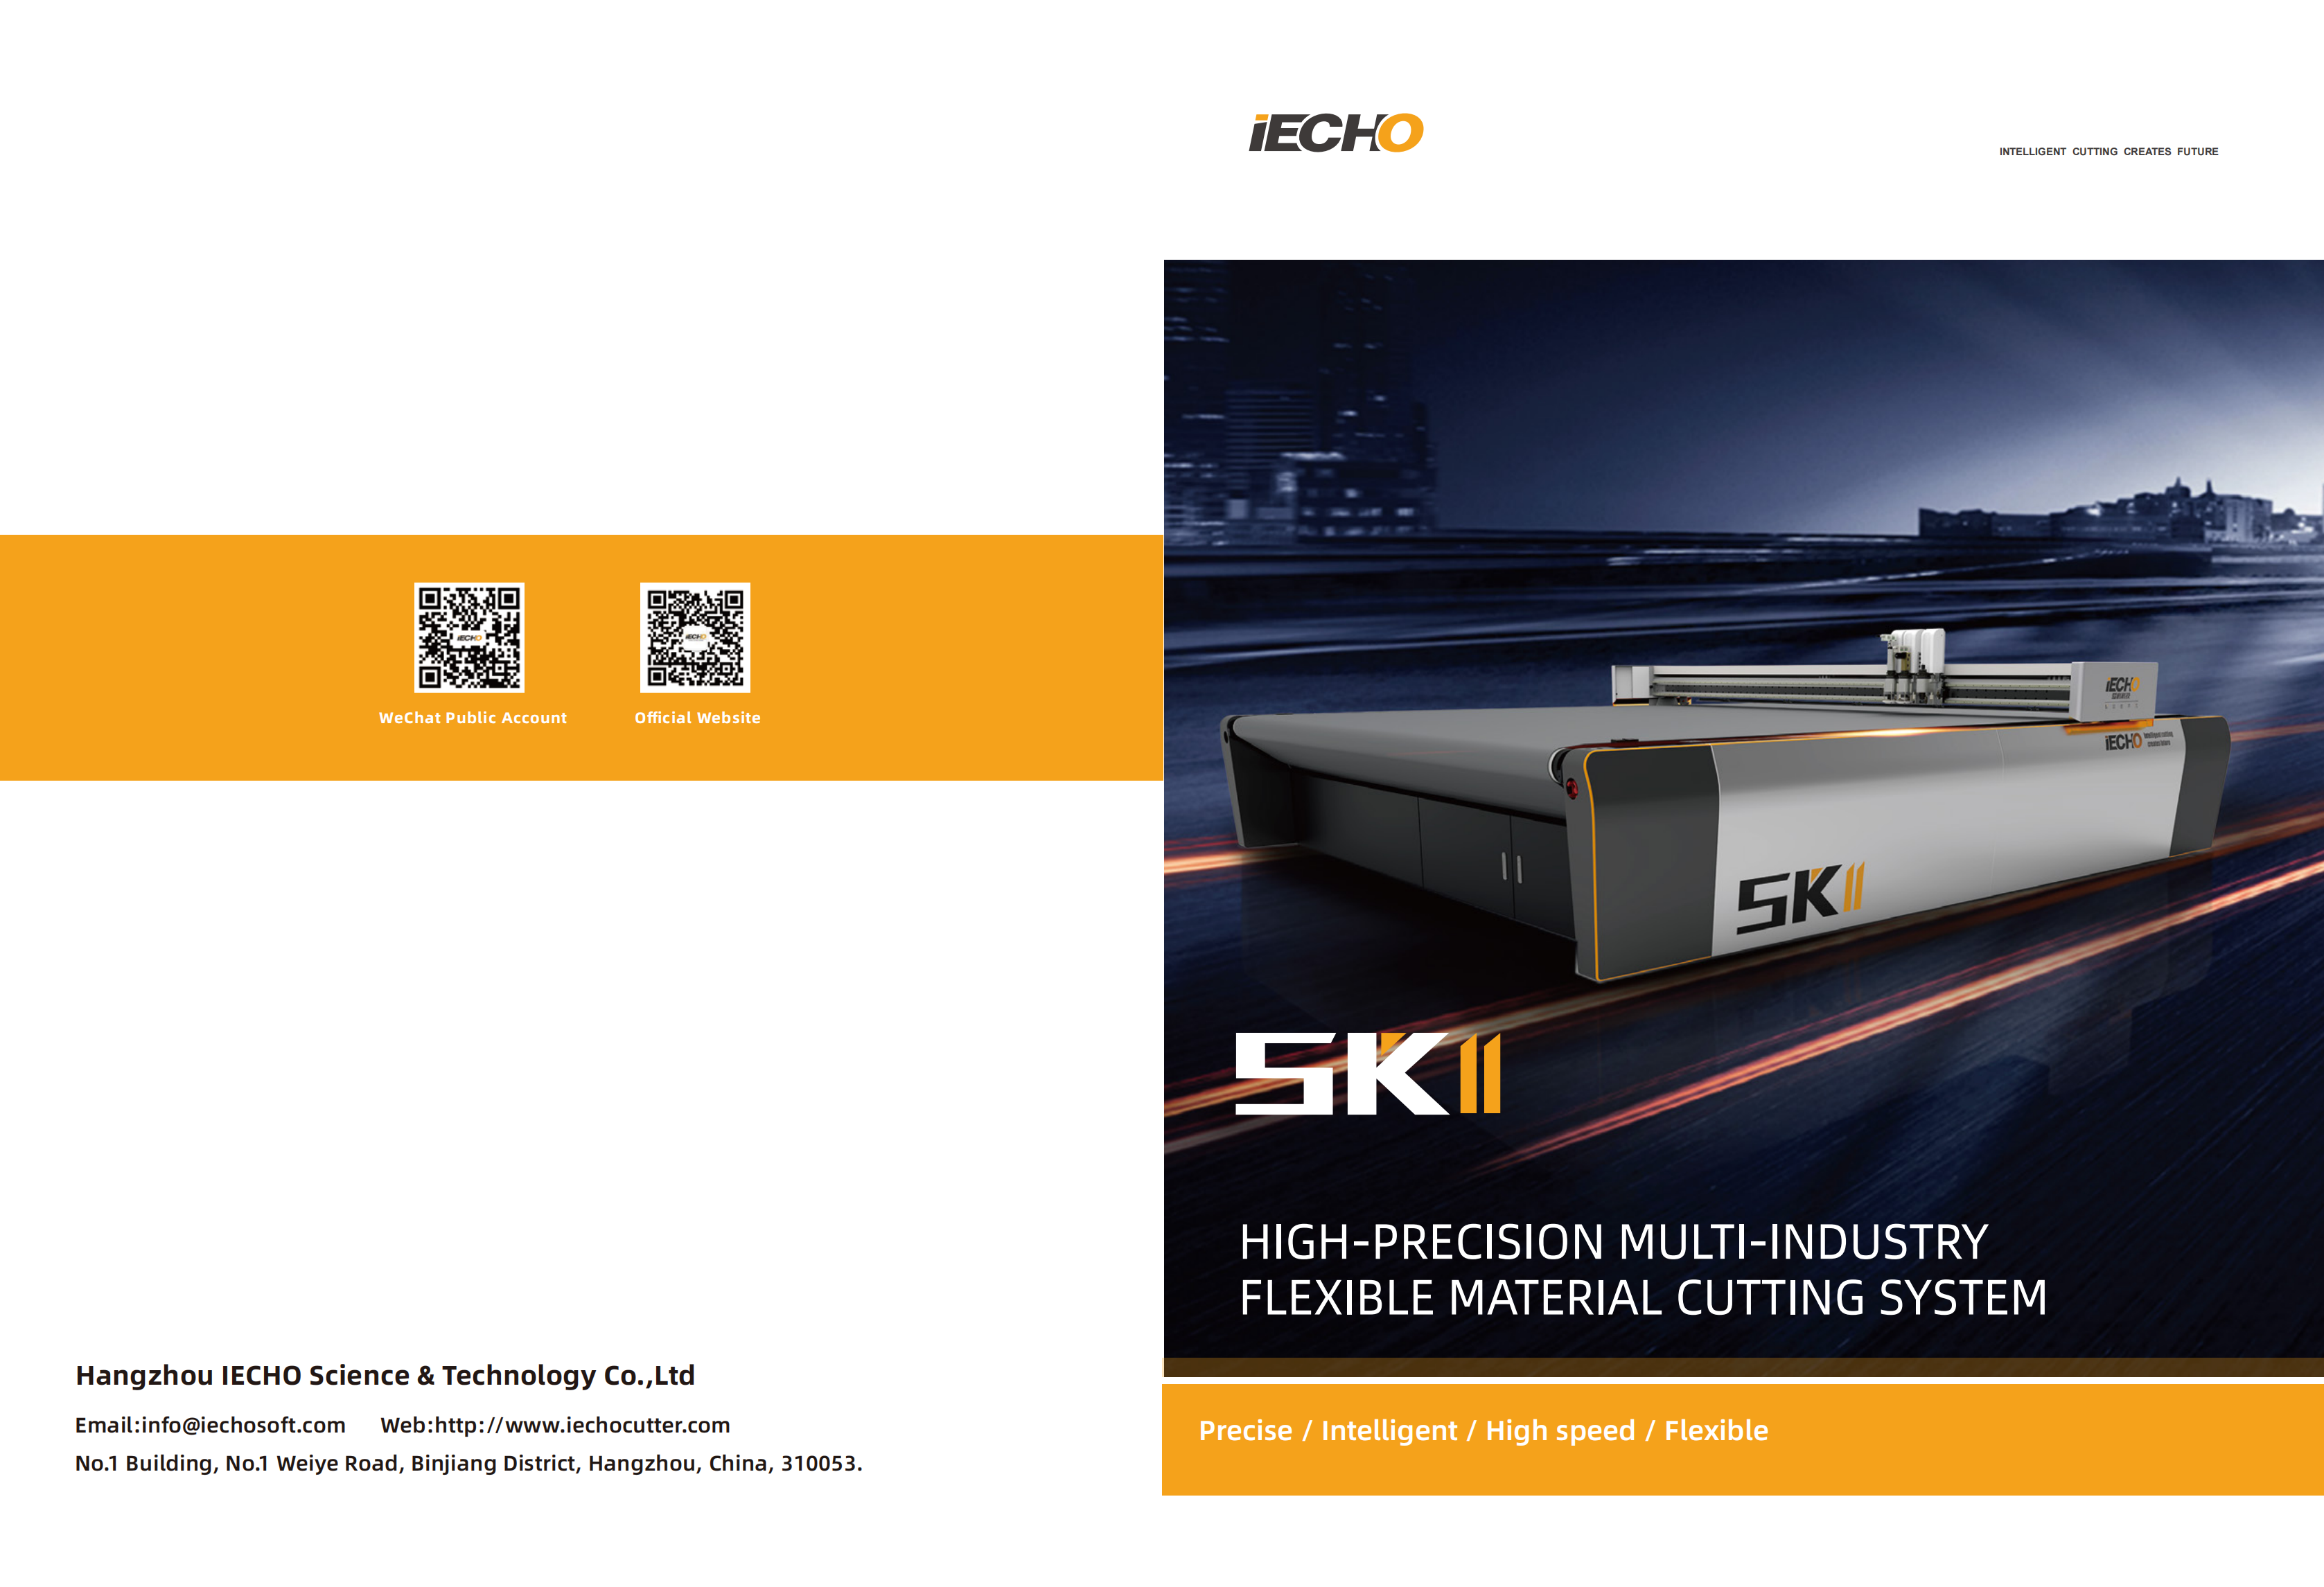 SK2 Product Brochure